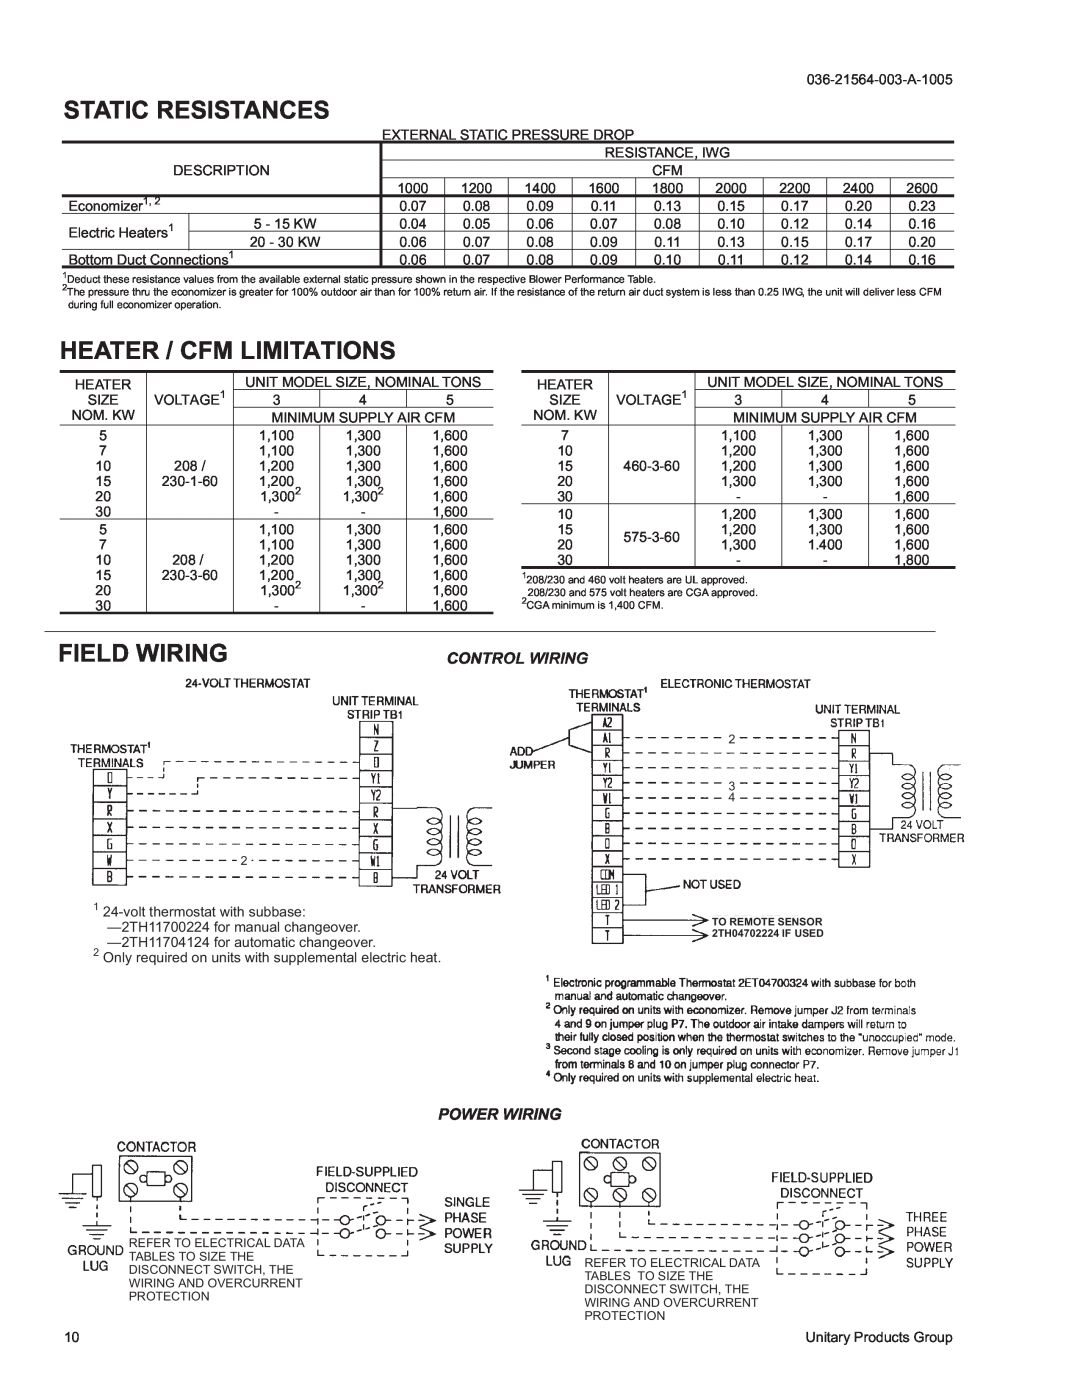 York 2000 warranty Static Resistances, Heater / Cfm Limitations, Field Wiring, Control Wiring, Power Wiring 